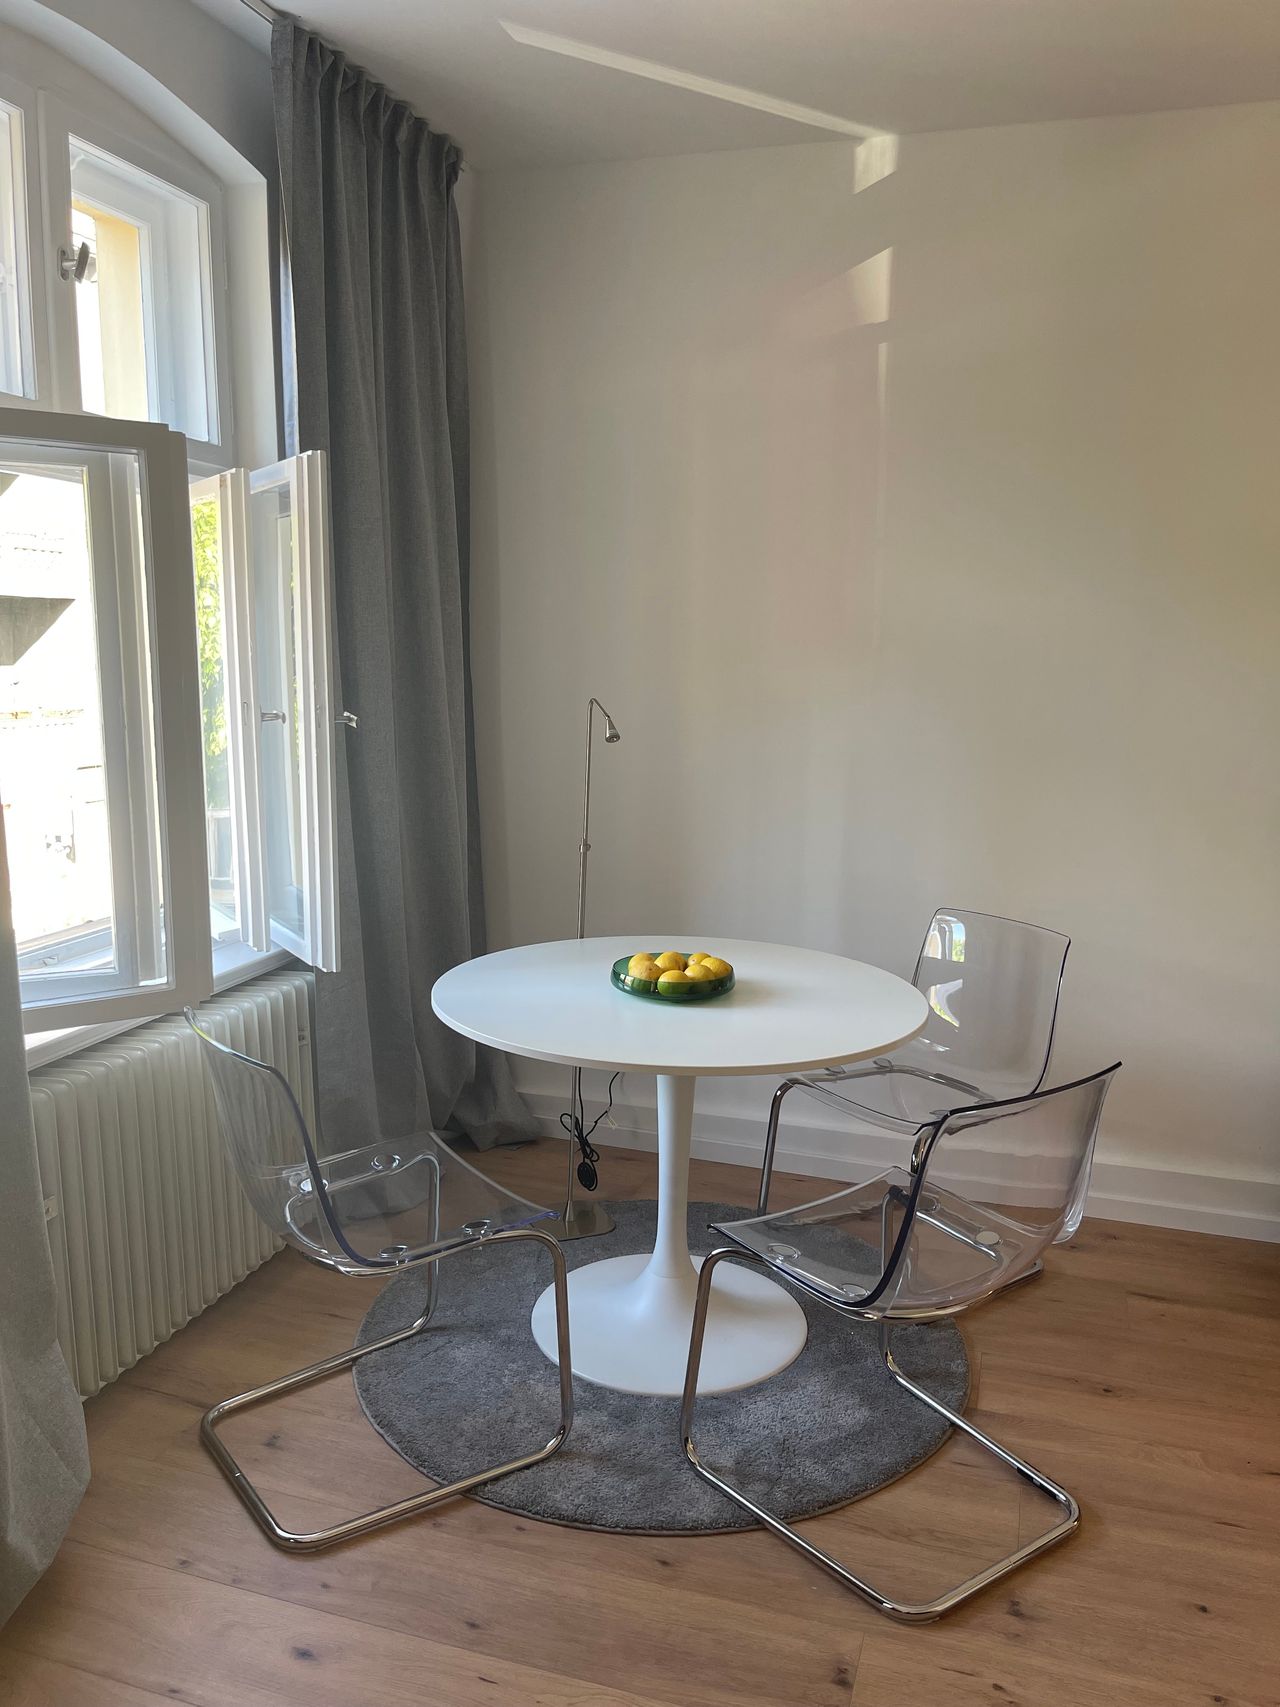 Freshly refurbished flat in charming Neukölln-Rixdorf